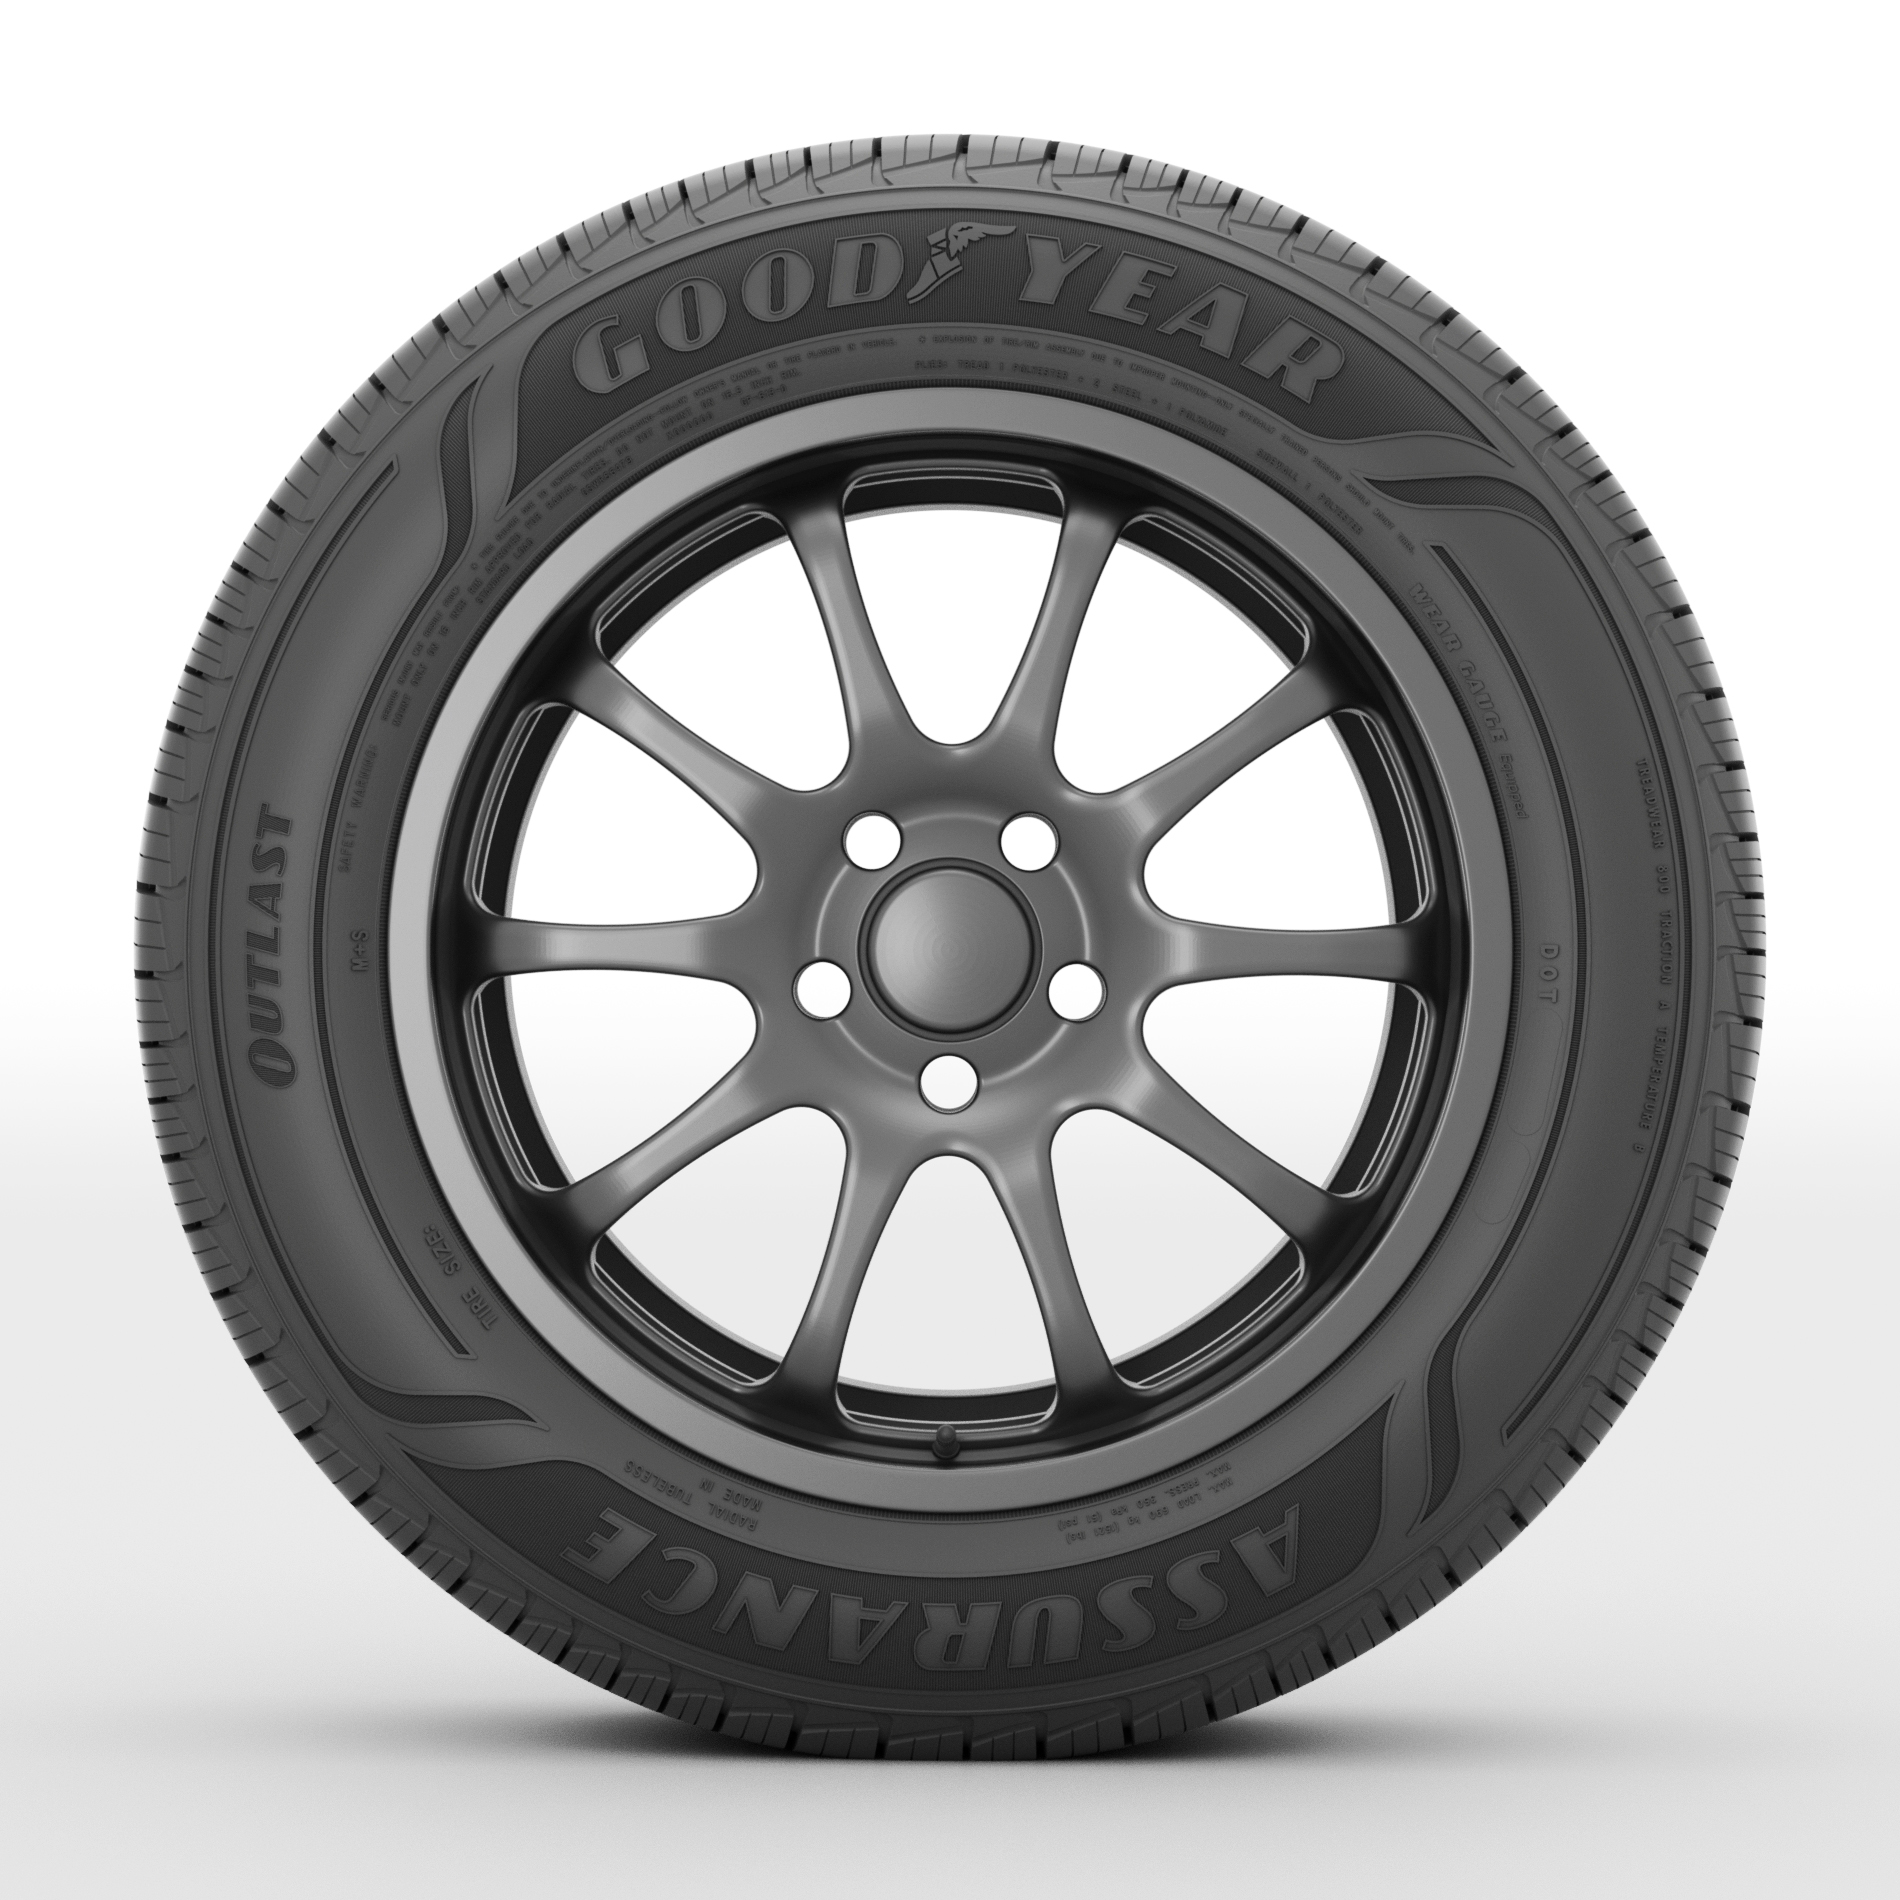 Assurance® All-Season Tires